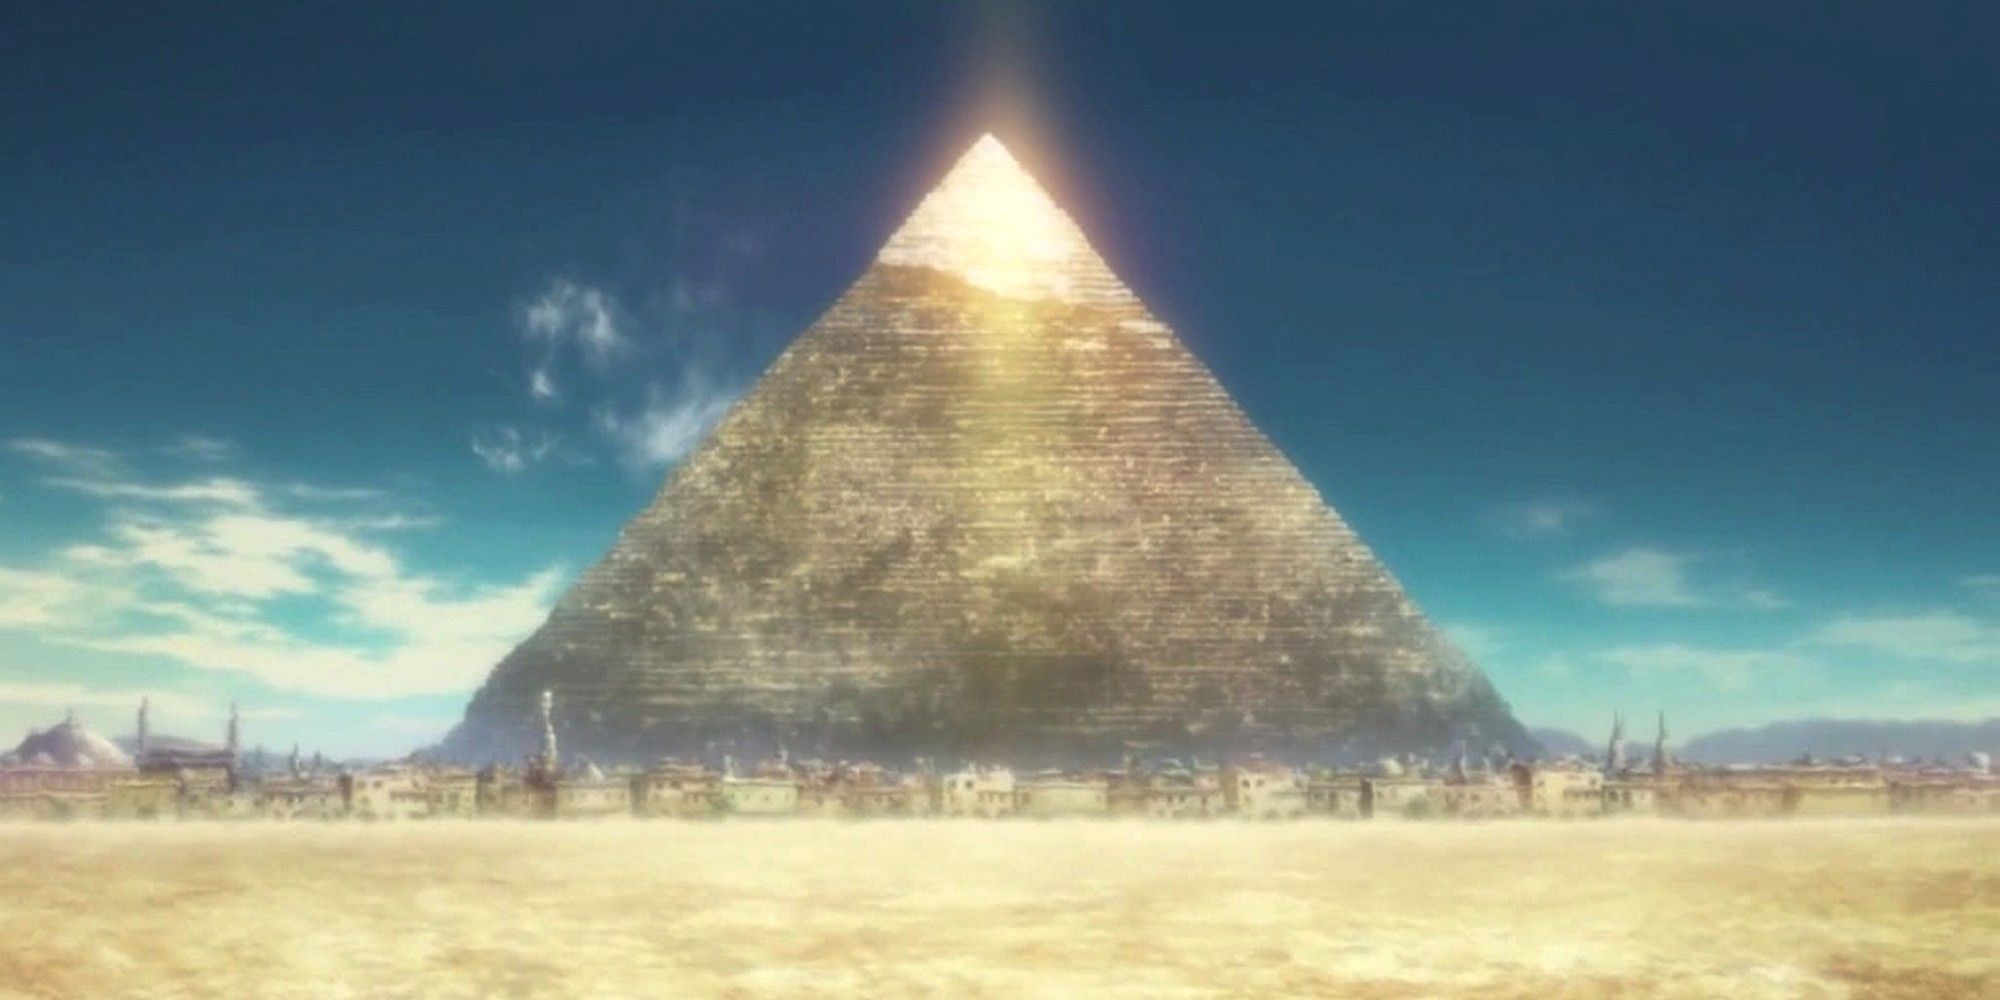 futaba's pyramid palace exterior in the desert